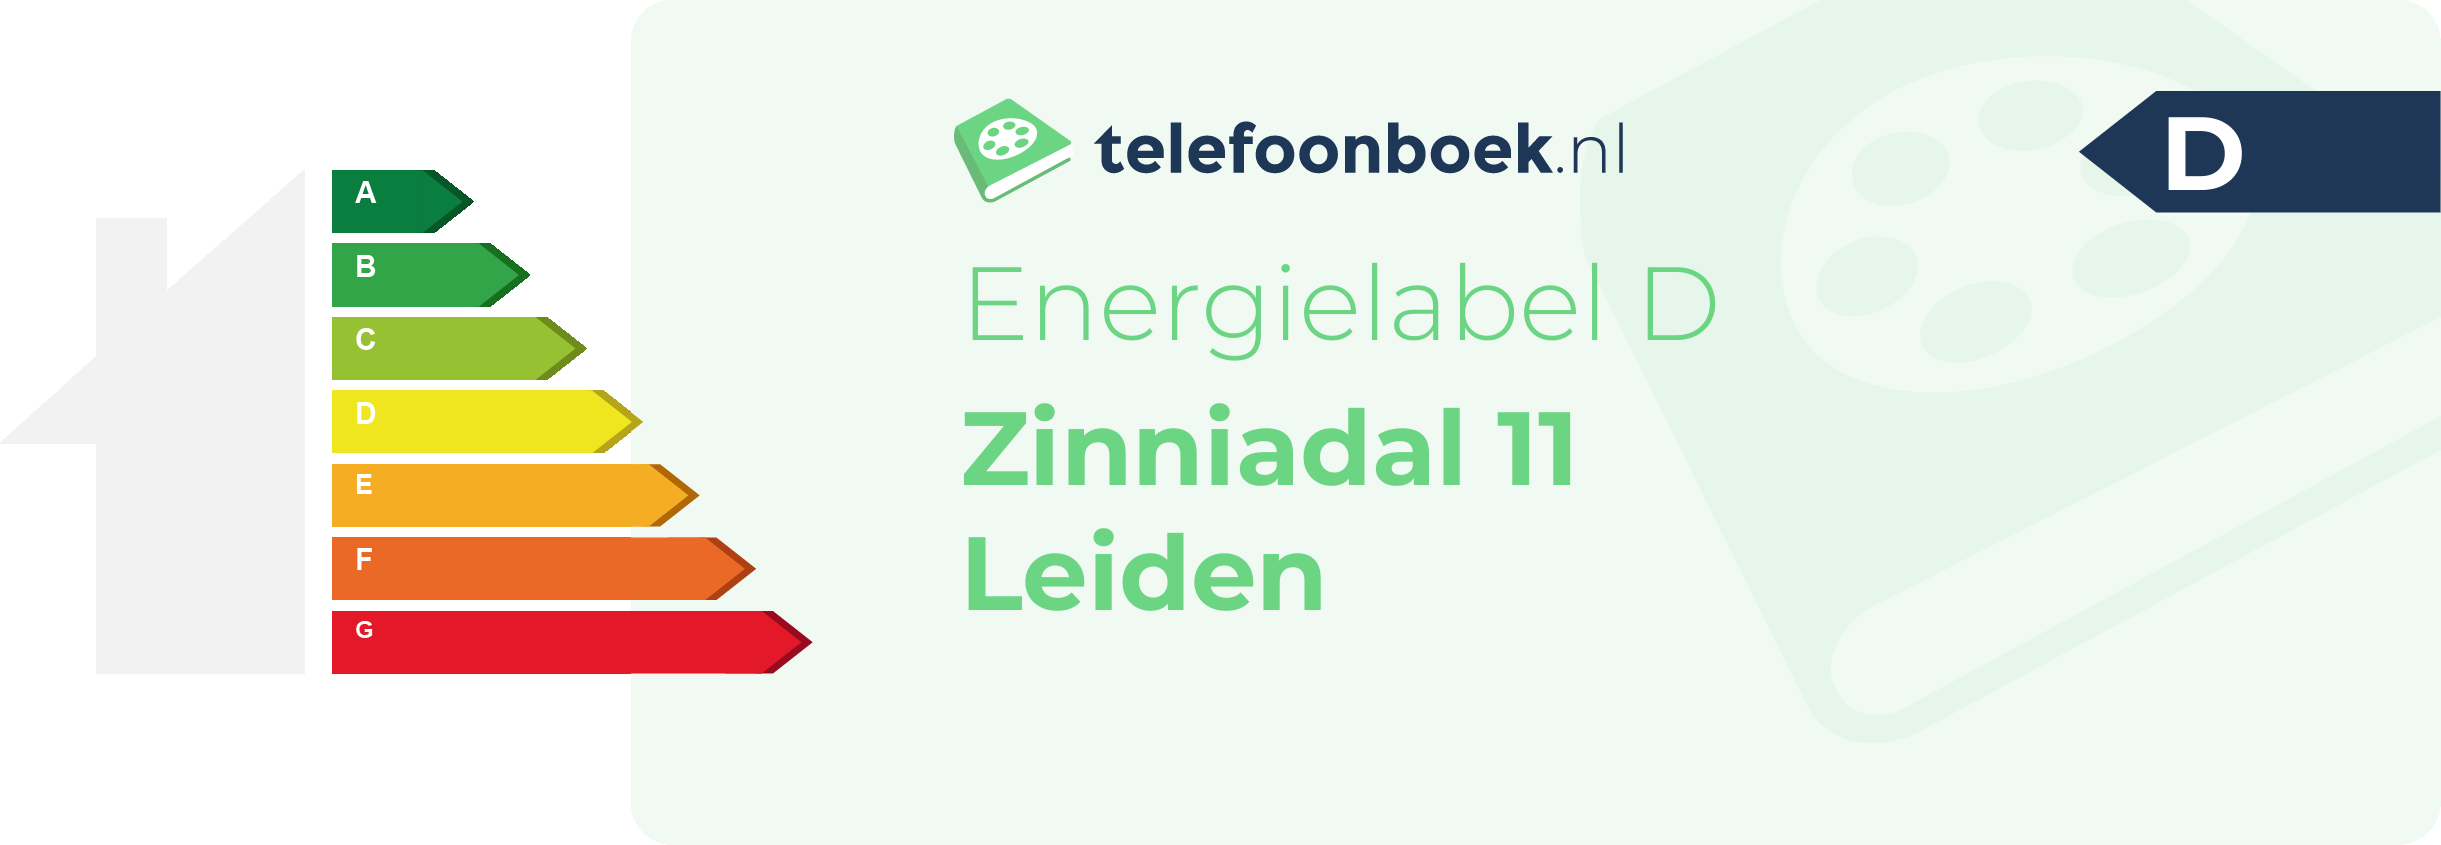 Energielabel Zinniadal 11 Leiden